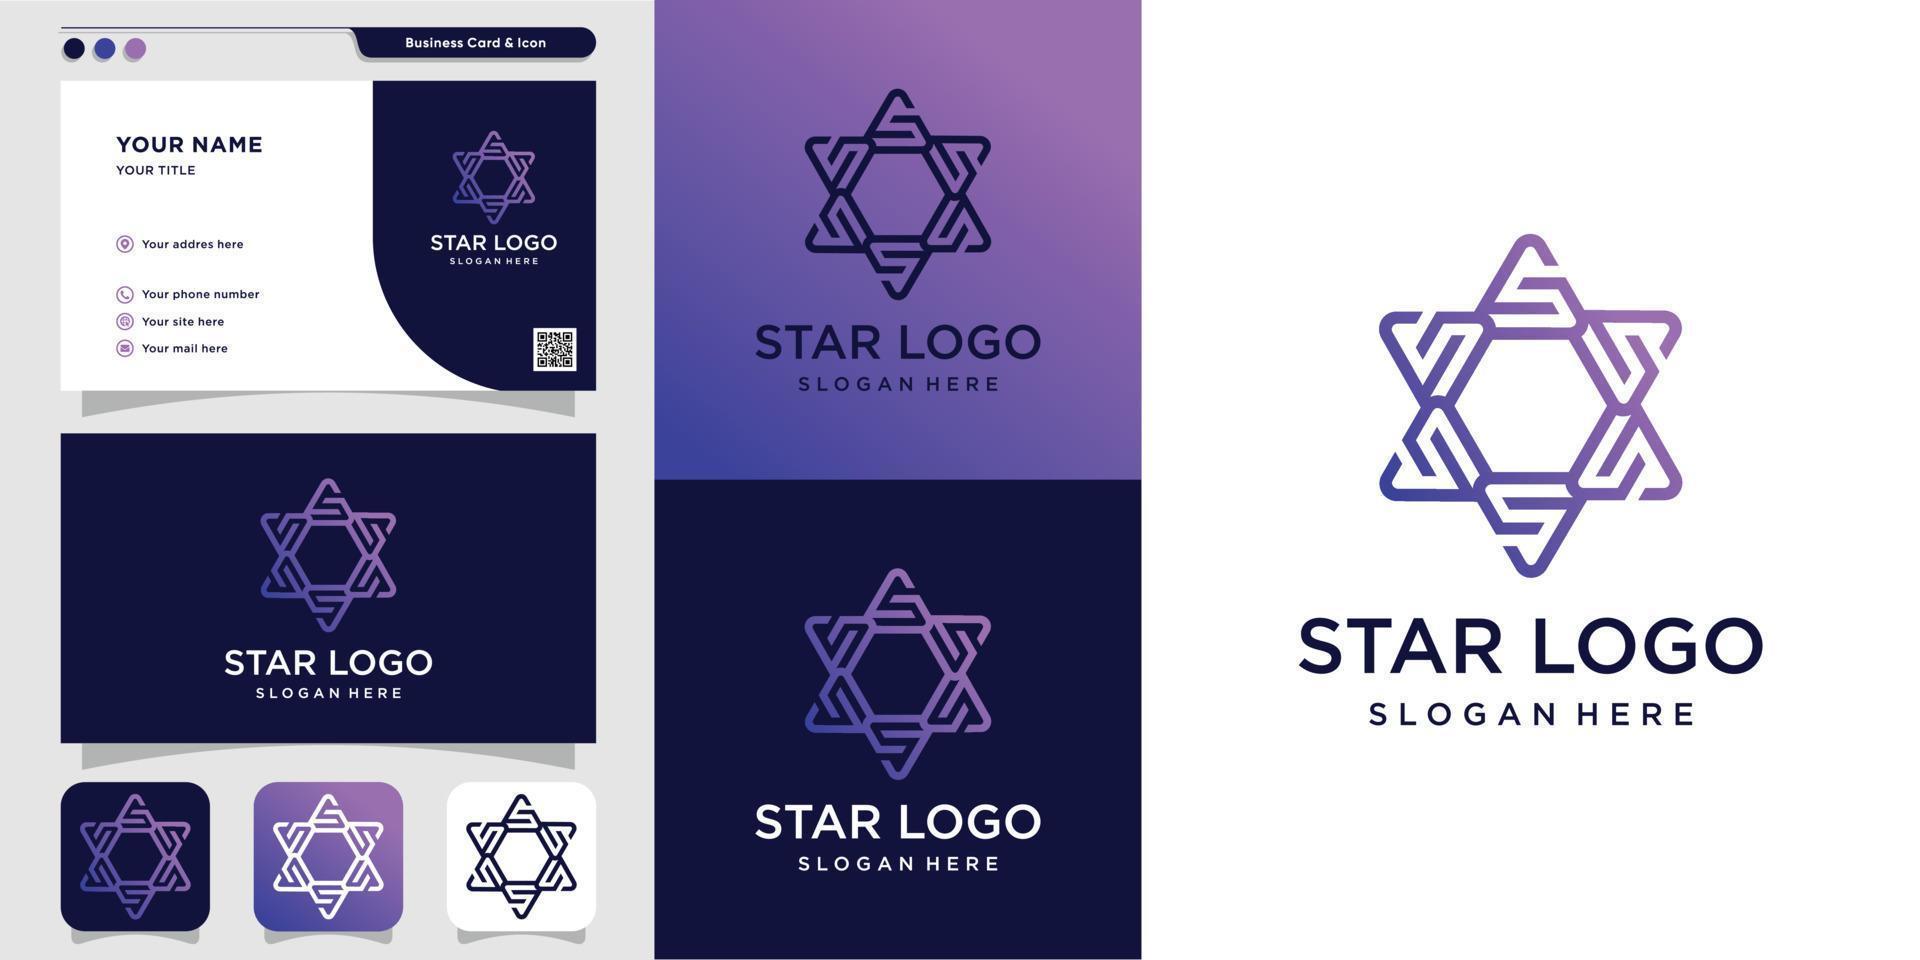 Star logo and business card design illustration Premium Vector